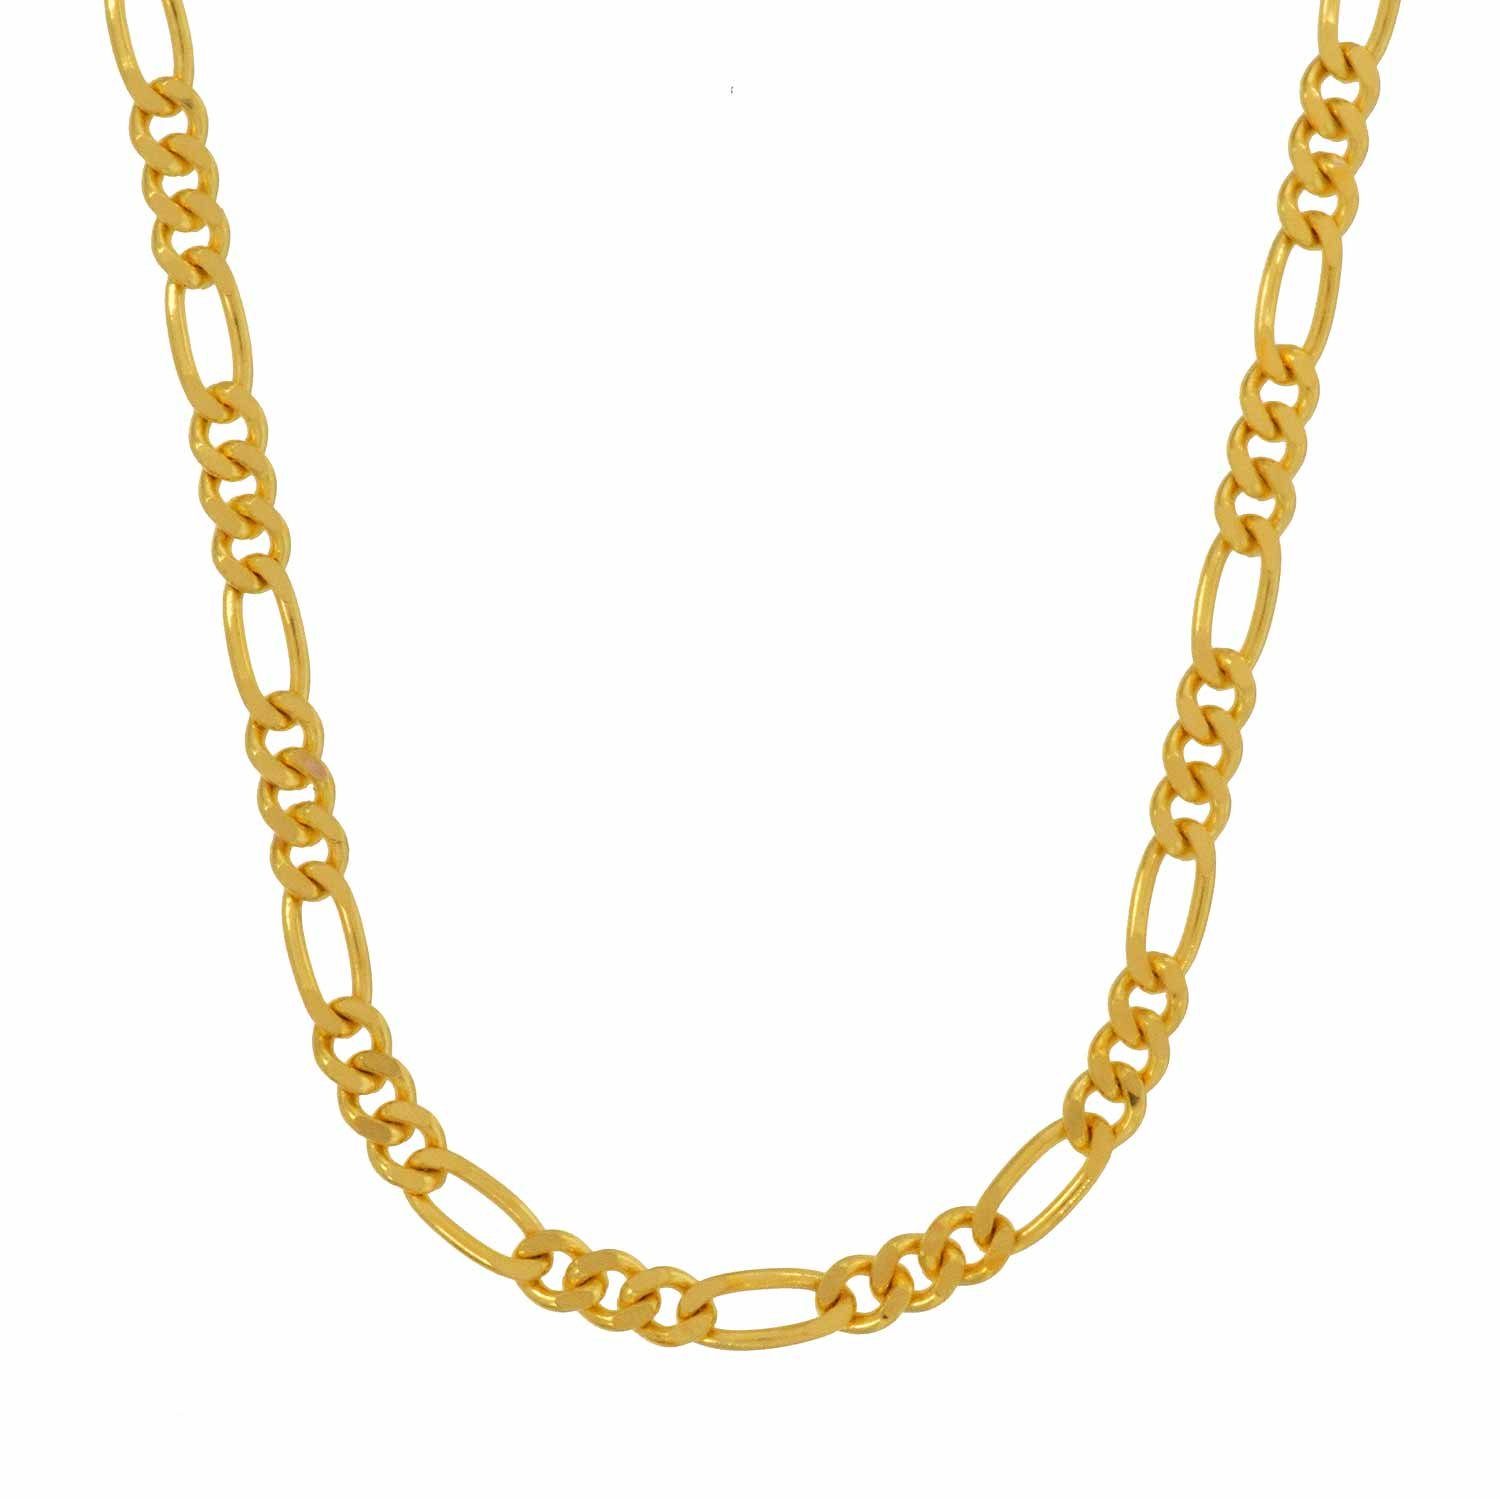 HOPLO Goldkette Figarokette 585 - 14 Karat Gold 2,2 mm 55 cm Halskette,  Made in Germany